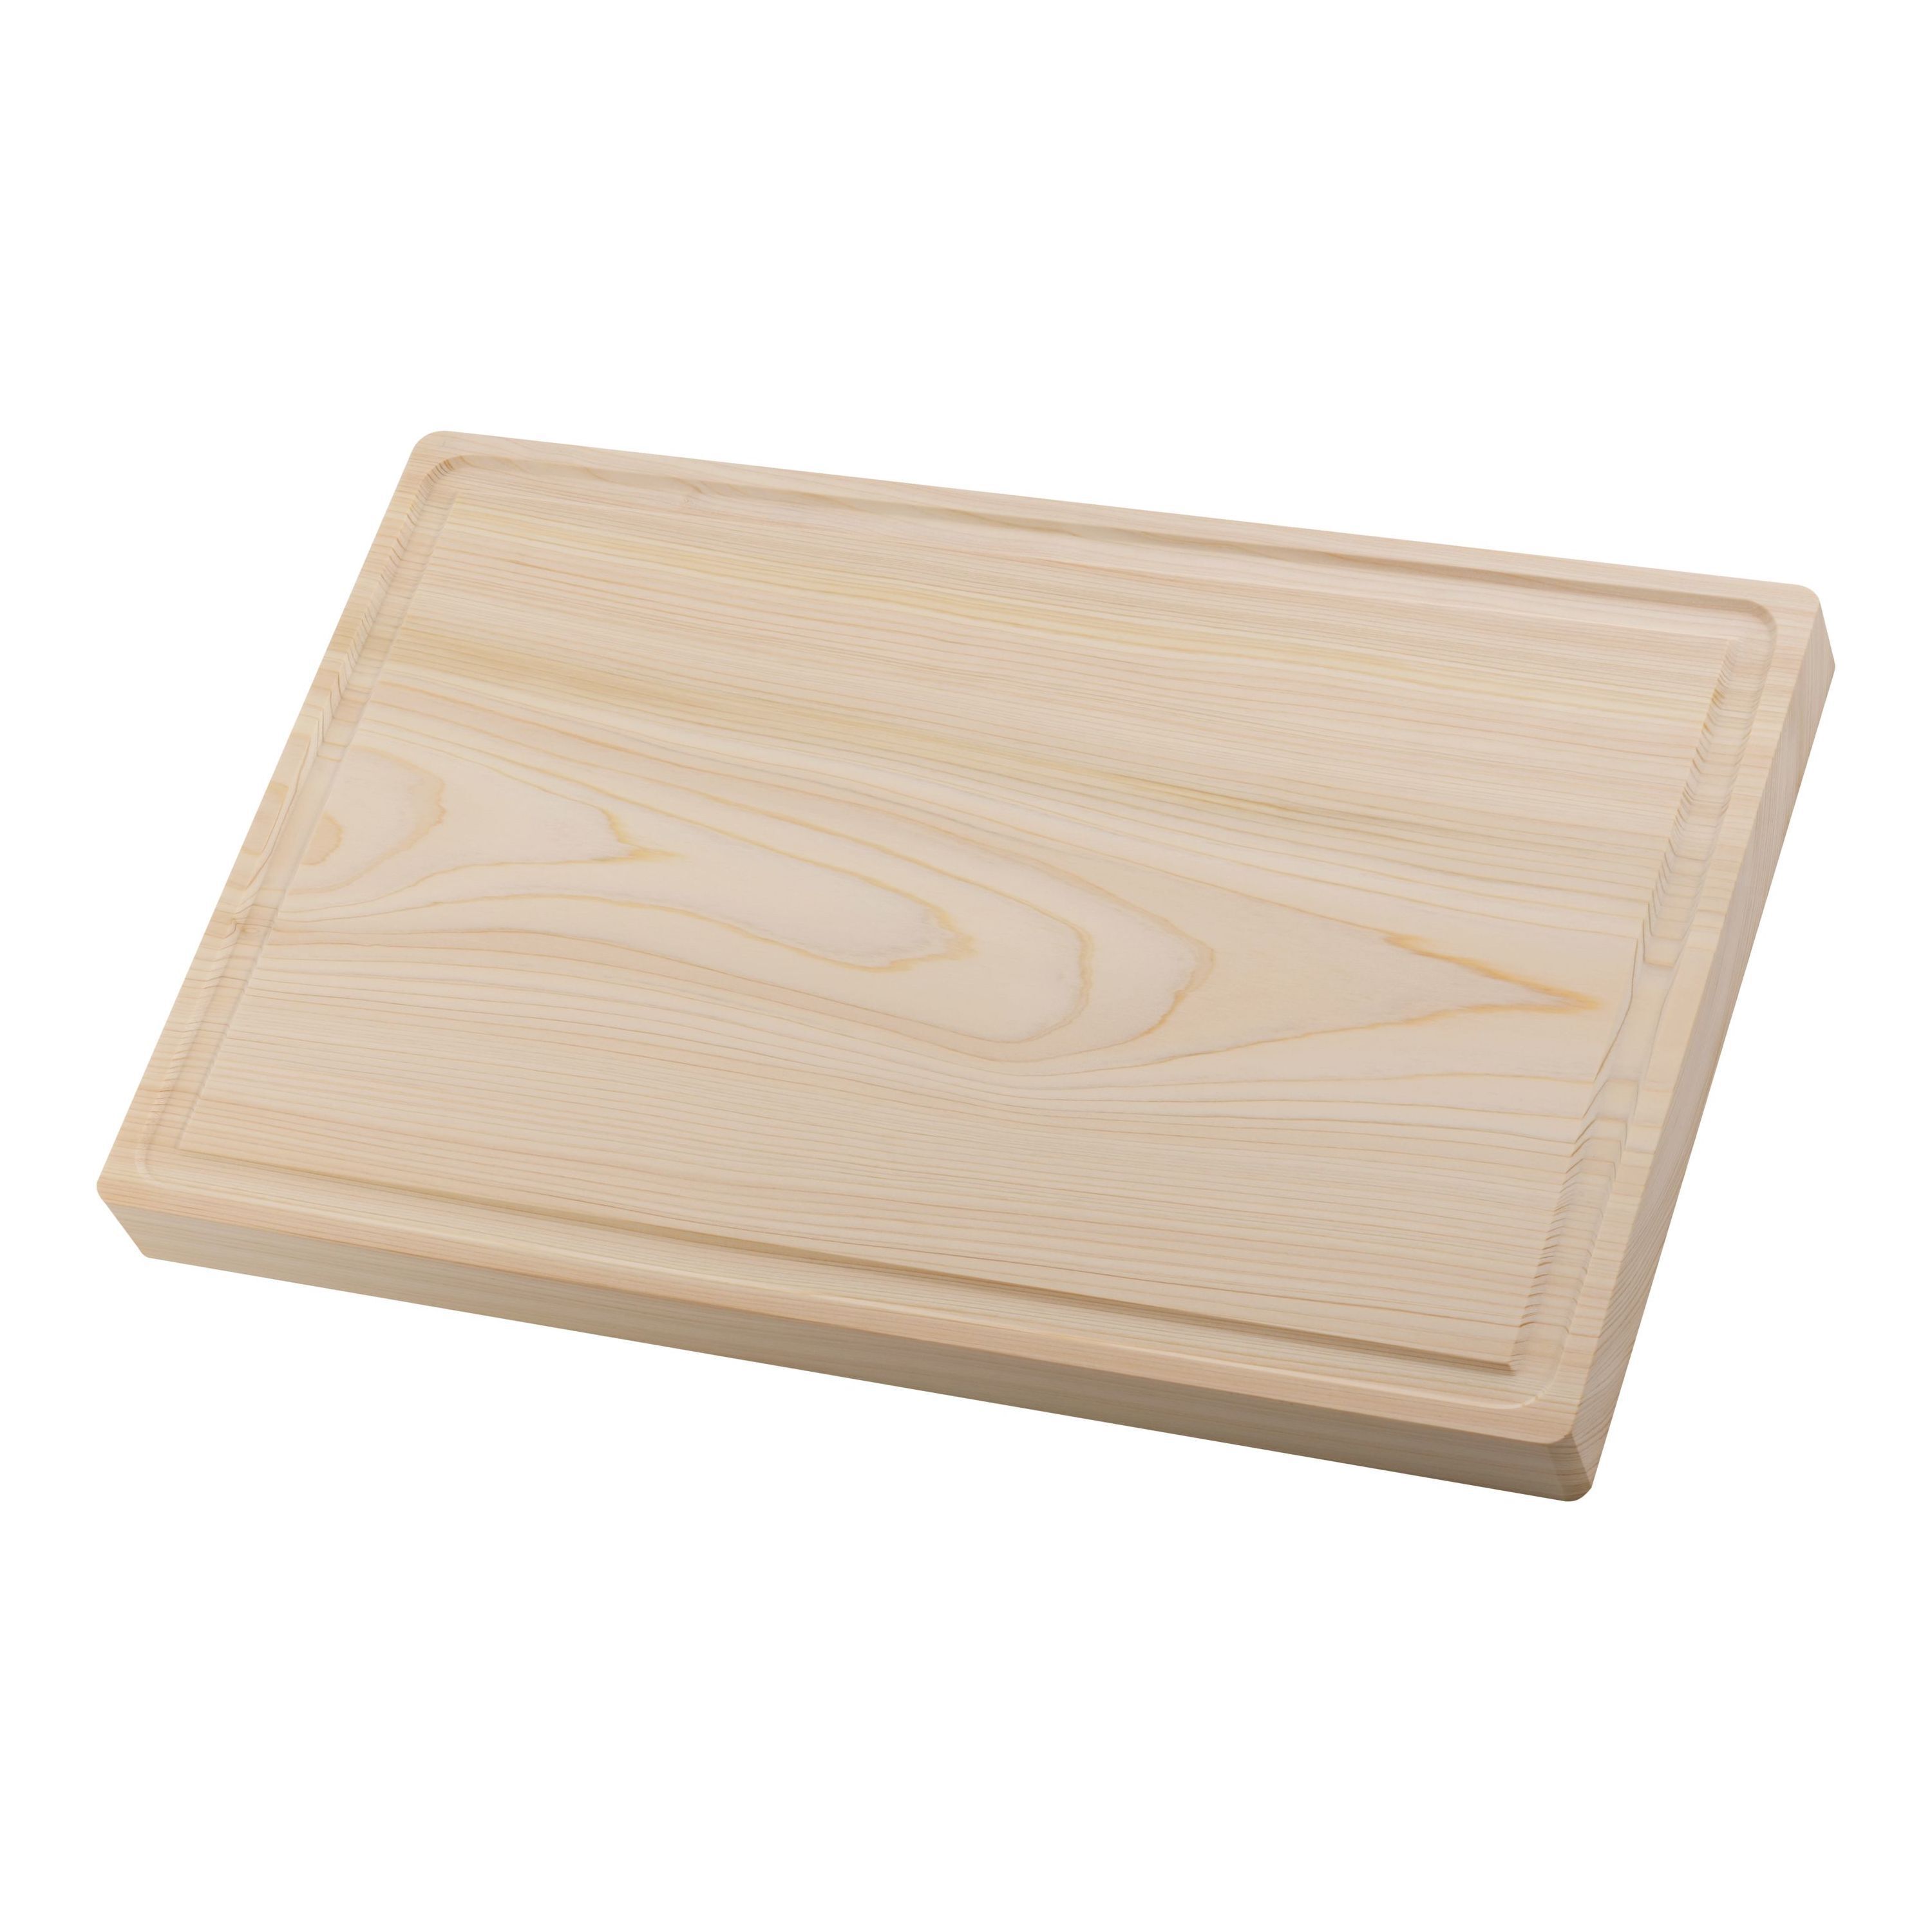 MIYABI Hinoki Cutting Boards Tagliere - 40 cm x 25 cm, marrone